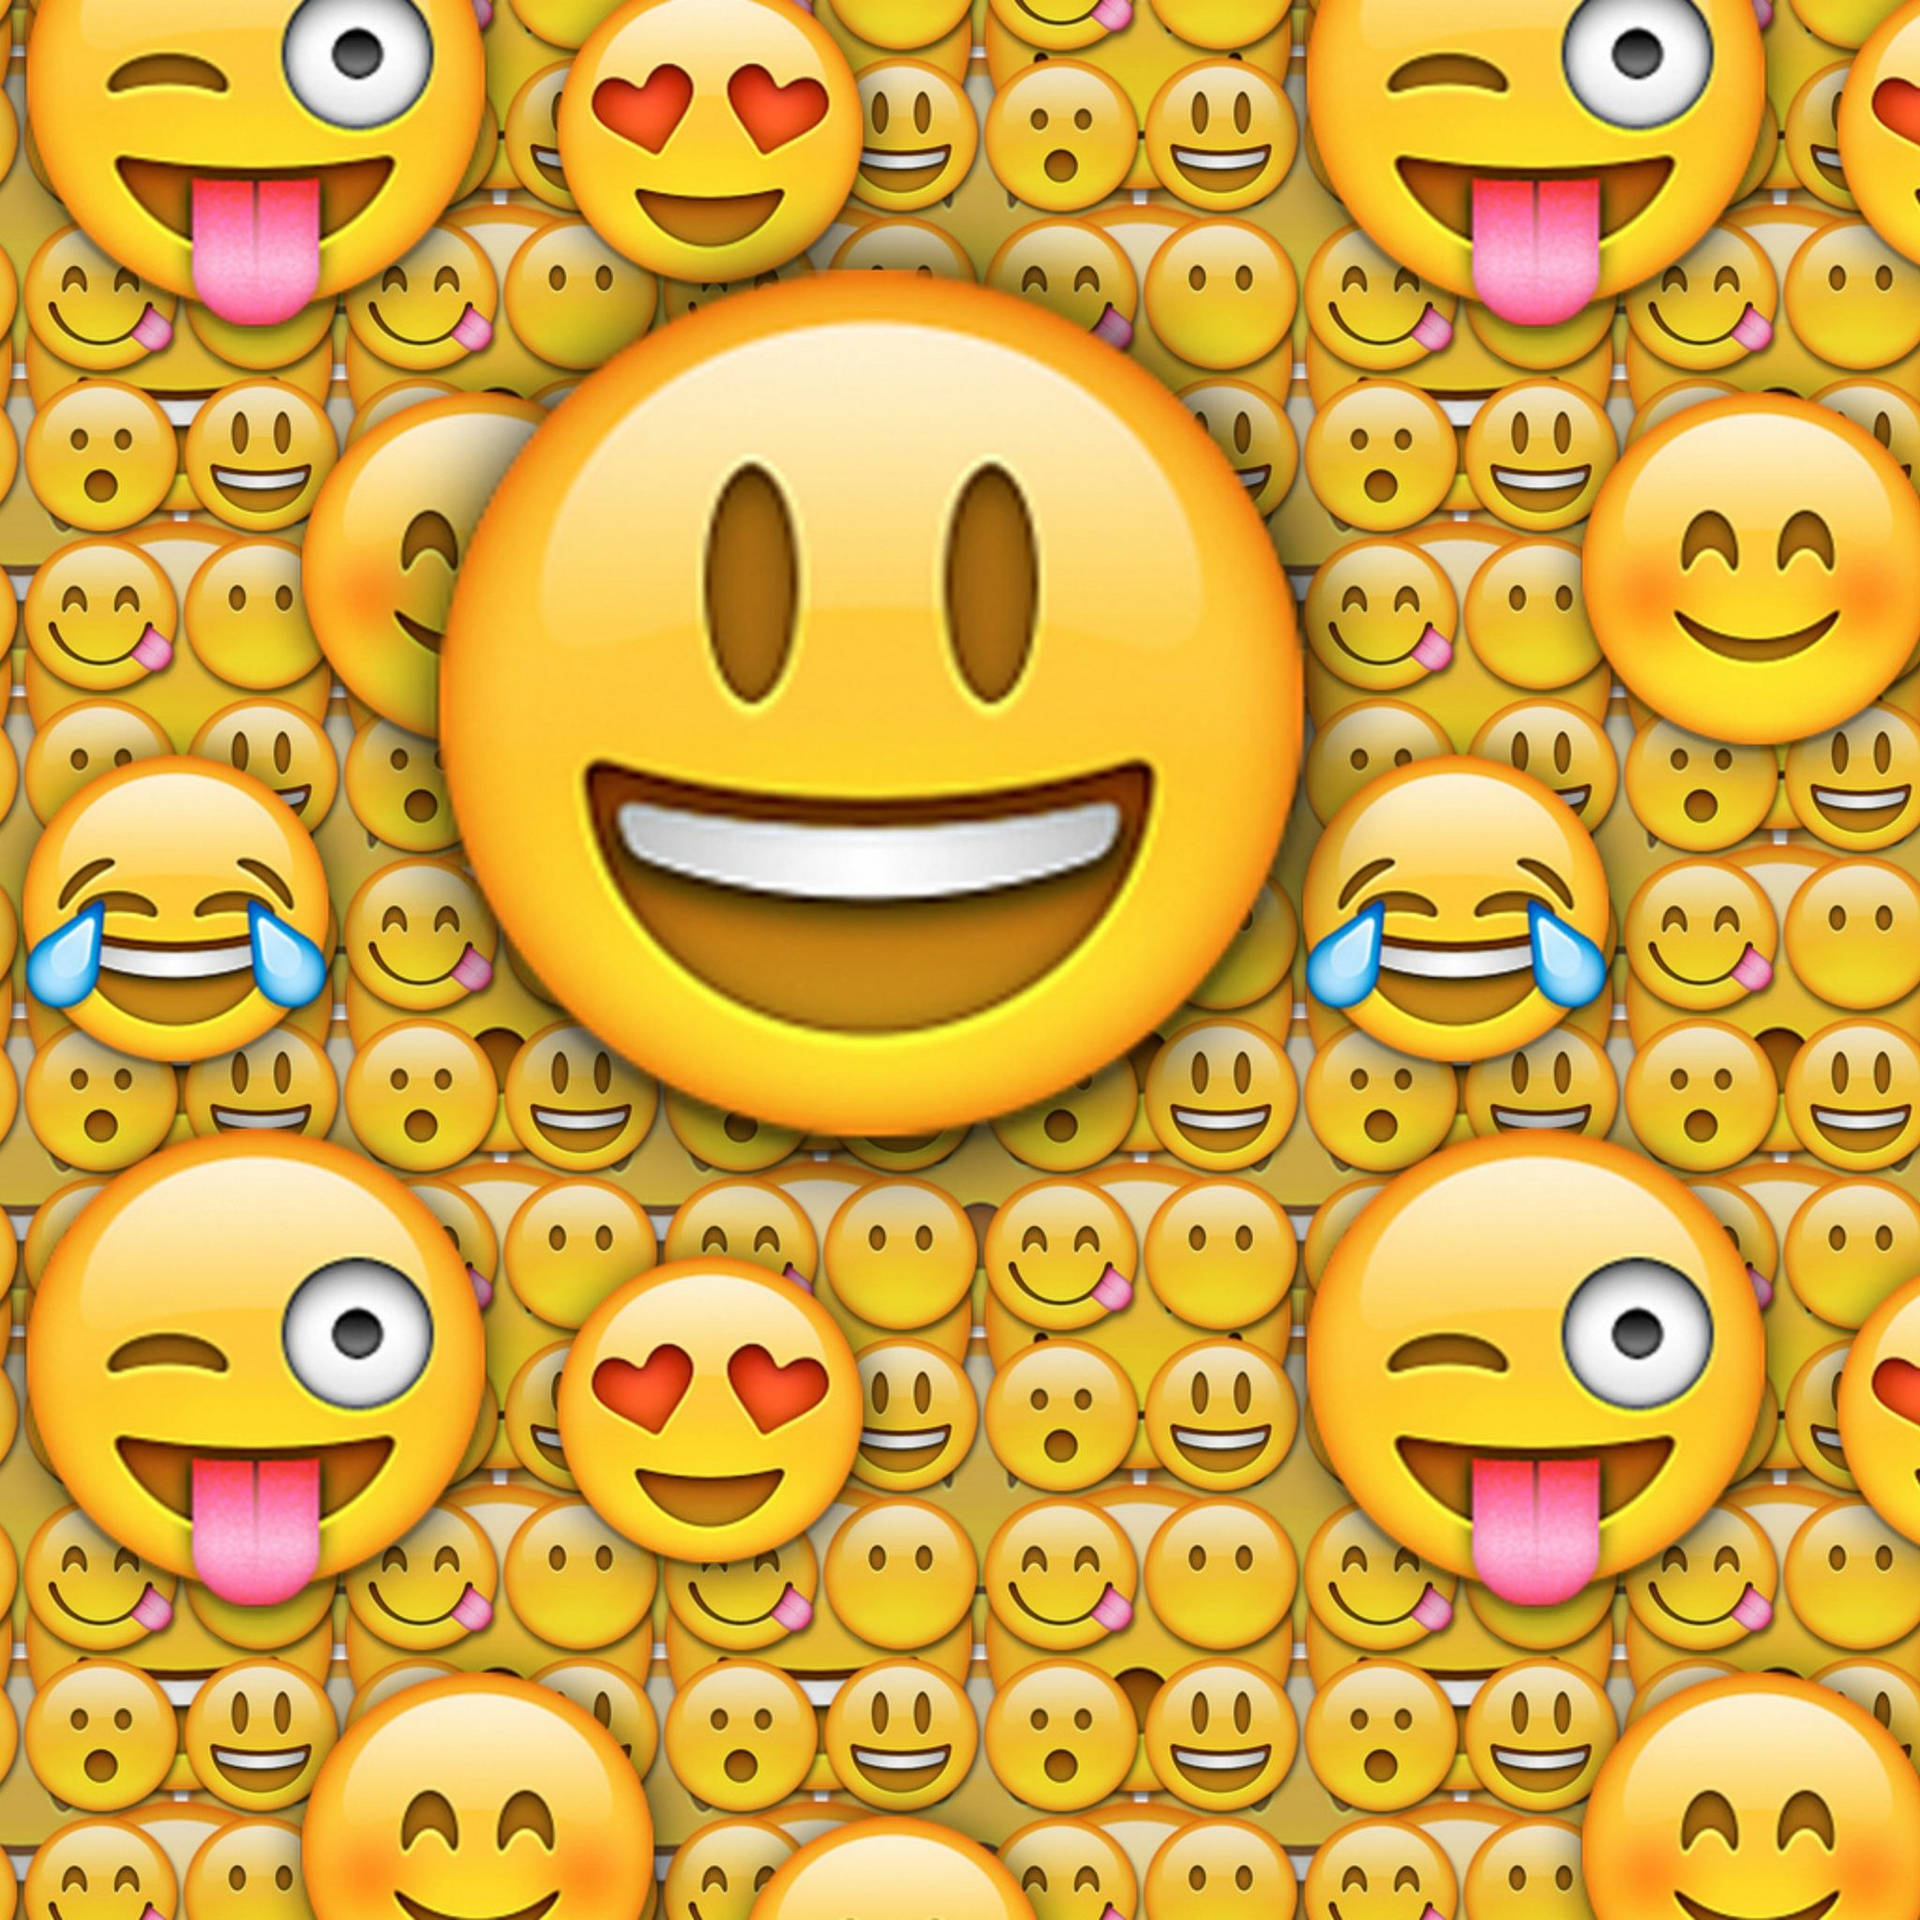 Emoji 2048X2048 Wallpaper and Background Image